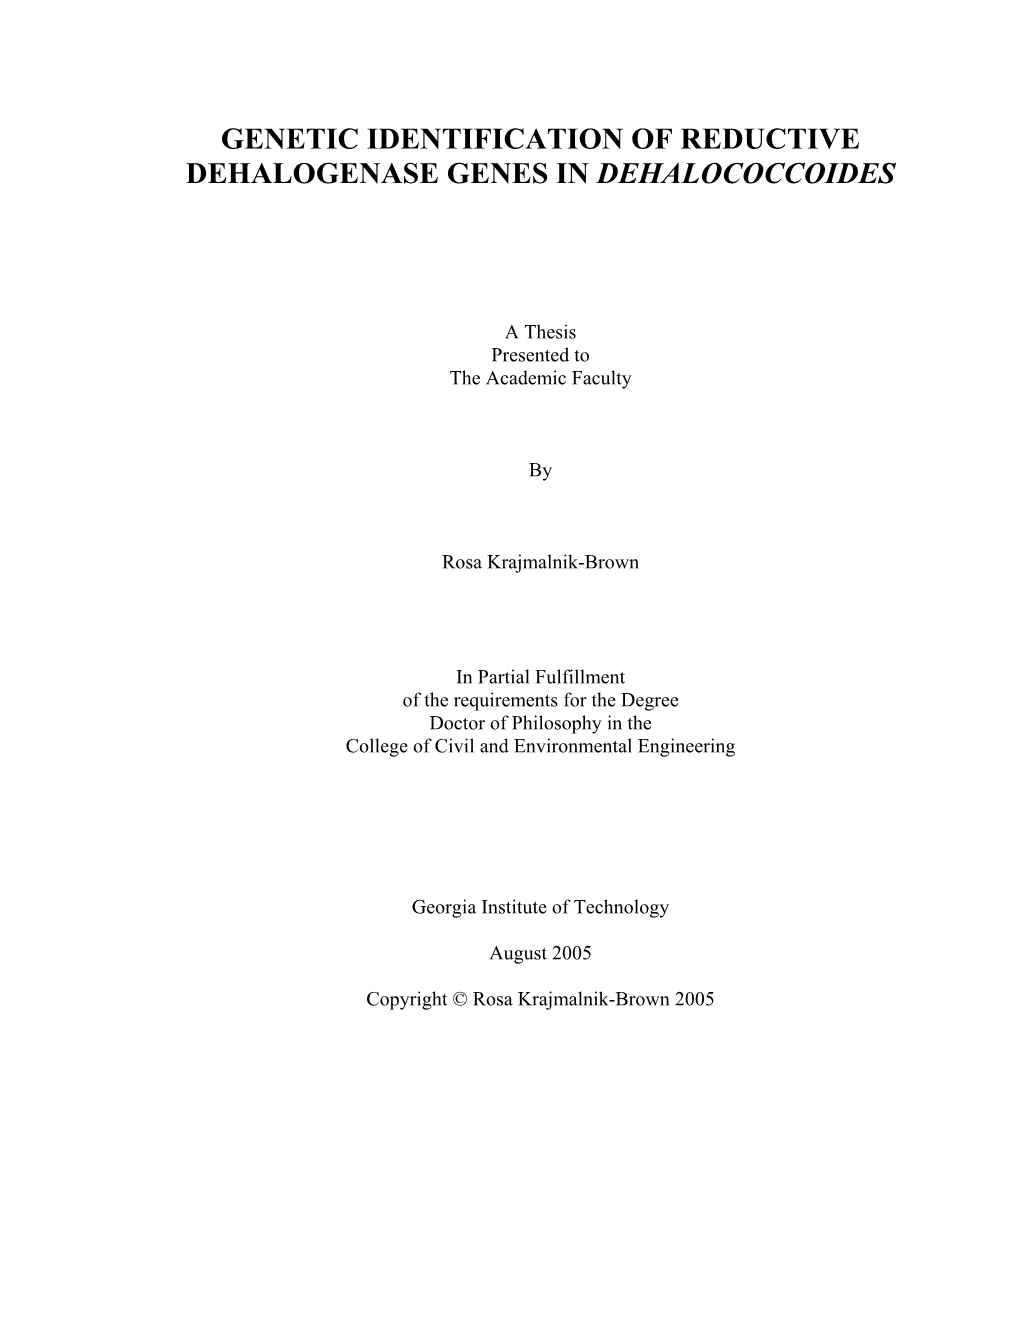 Genetic Identification of Reductive Dehalogenase Genes in Dehalococcoides